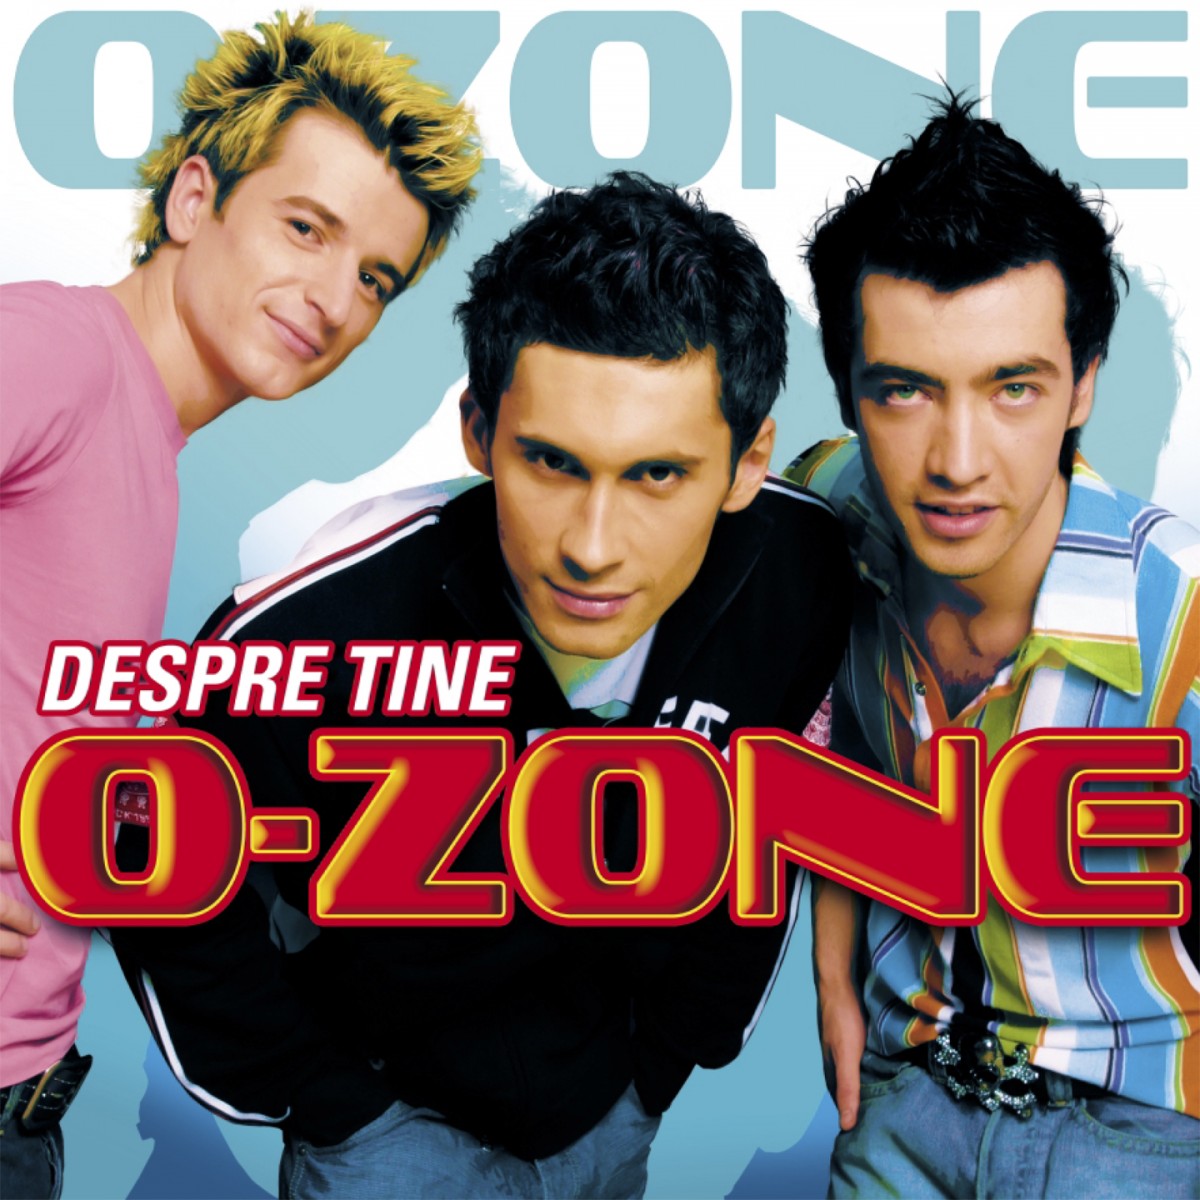 Ozone din. Ozone обложка альбома o-Zone. Участники группы o Zone. O-Zone 2000 2004. Румынская группа Озон.